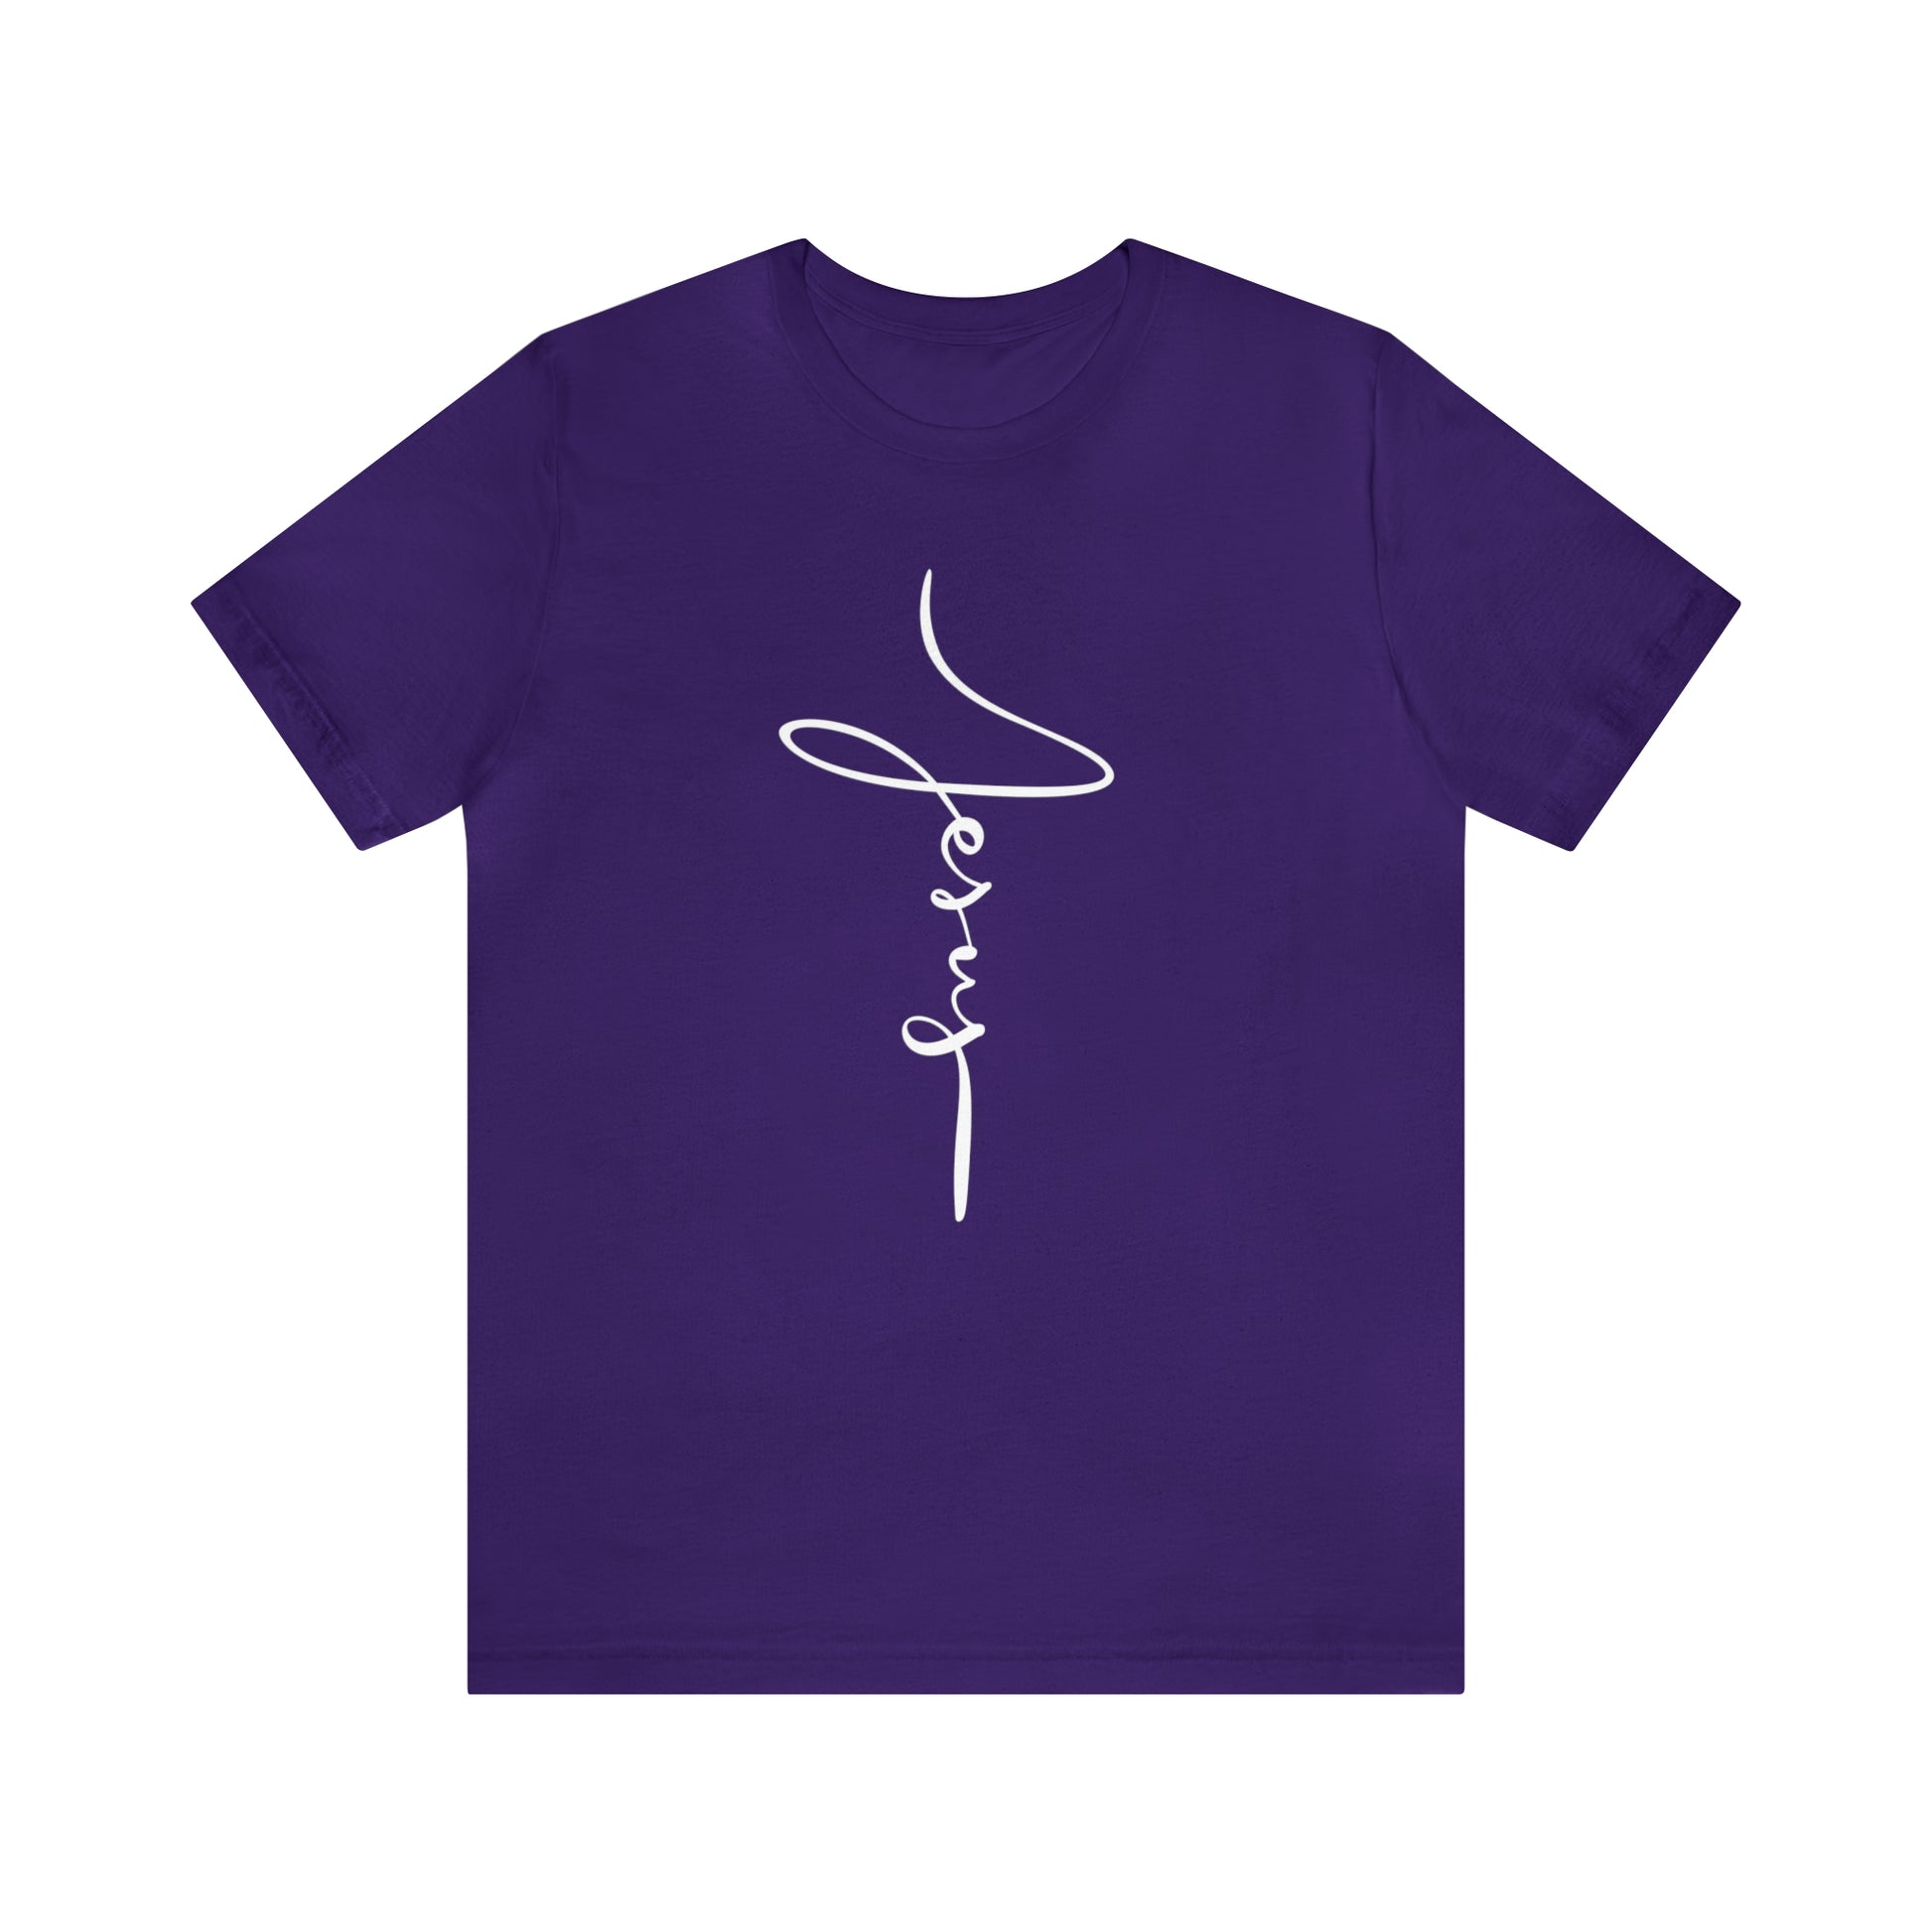 Jesus Cross Christian T-Shirt - Cursive White Font Bright Color Tees - Team Purple flatlay